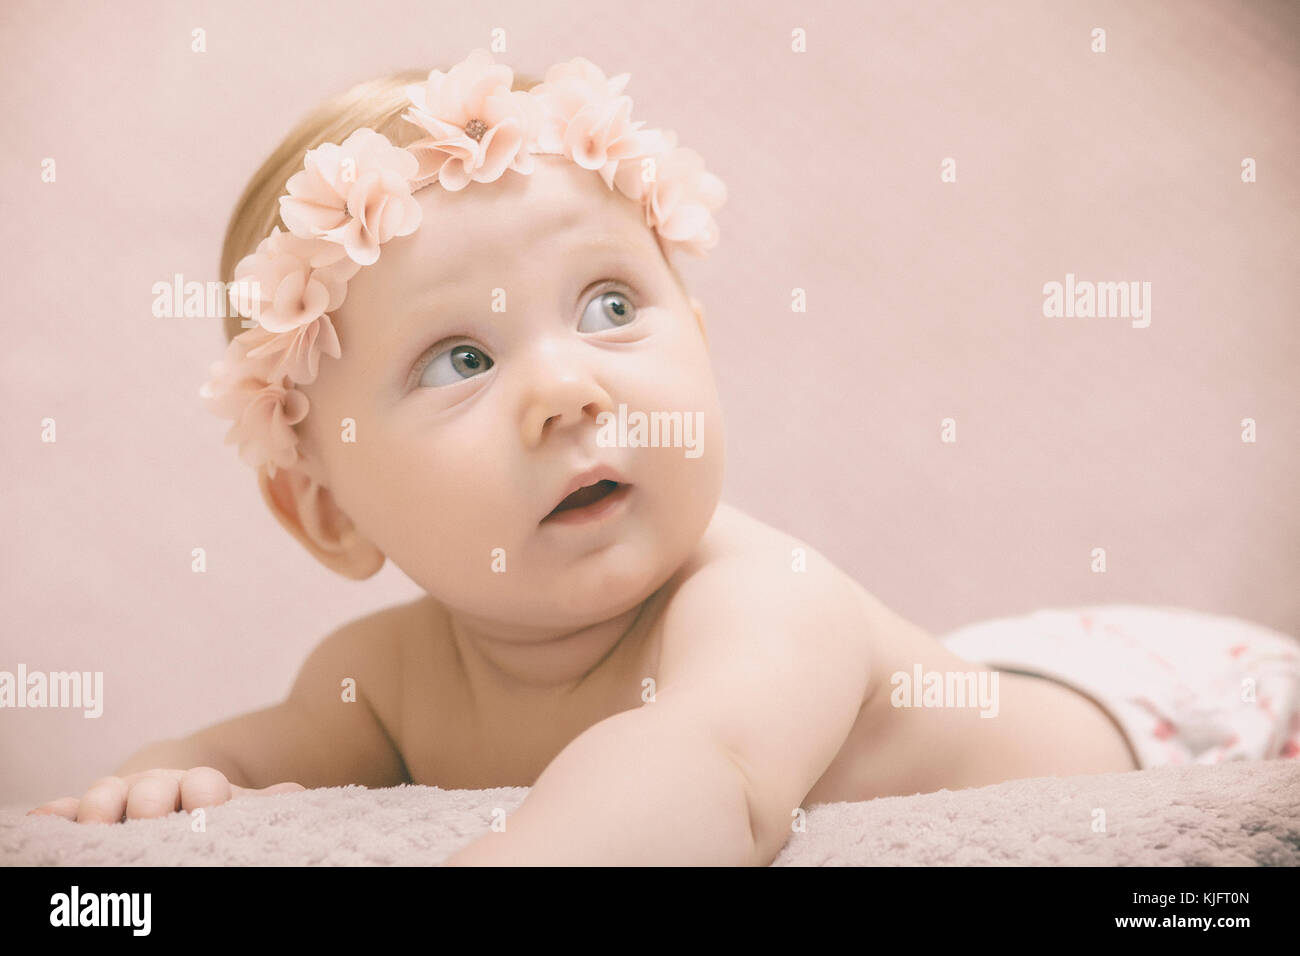 vintage baby portrait pastel tone image Stock Photo